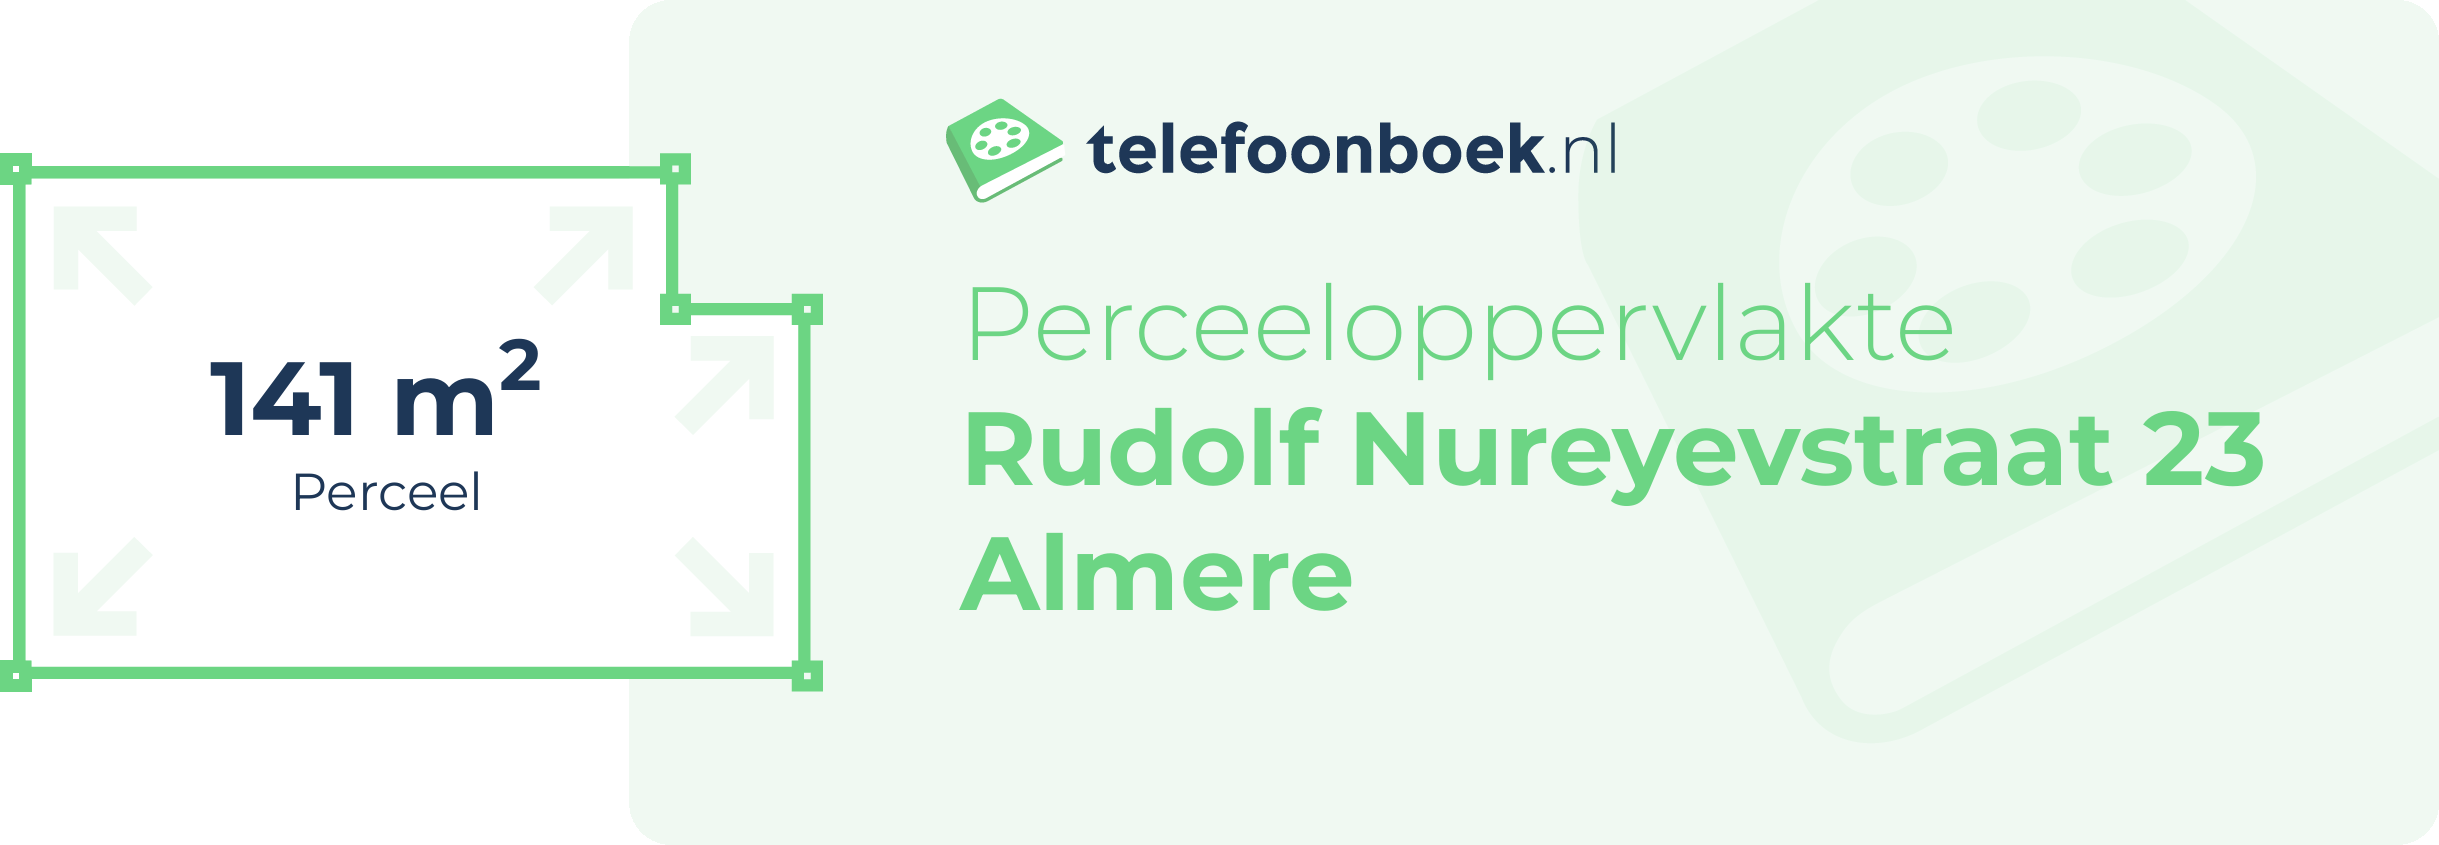 Perceeloppervlakte Rudolf Nureyevstraat 23 Almere